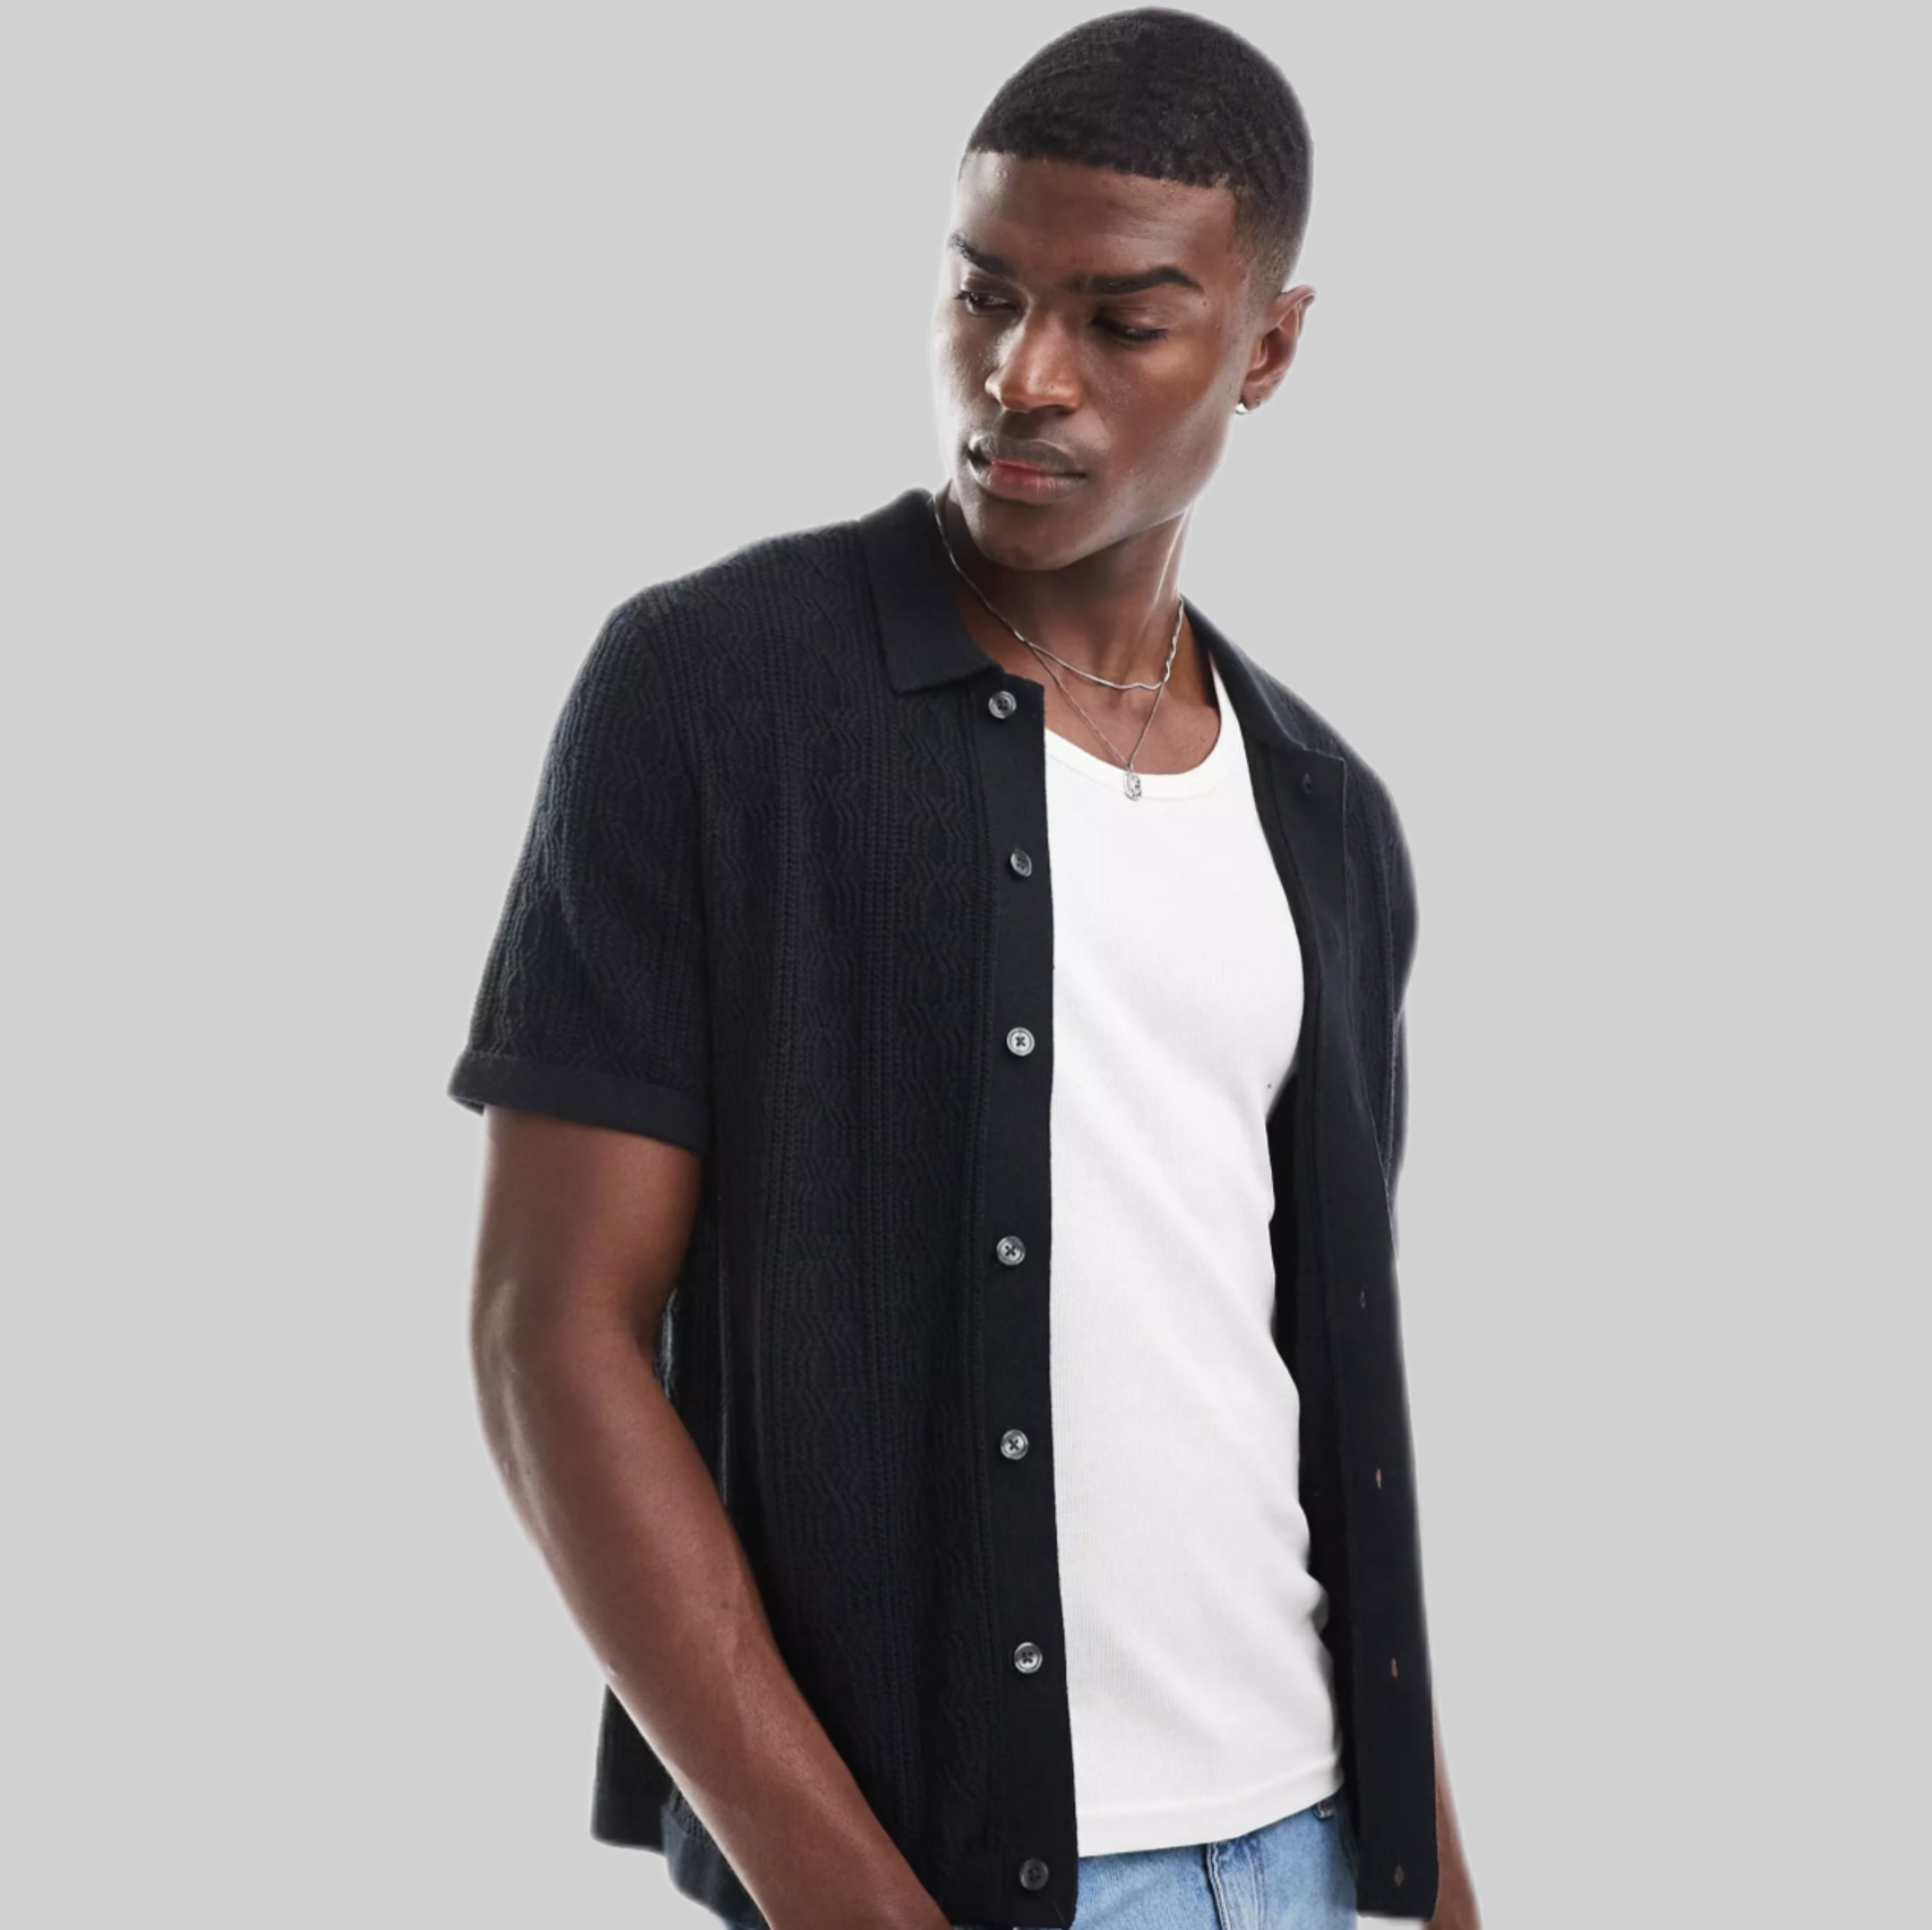 Abercrombie & Fitch shirt, men, frontside, black, model